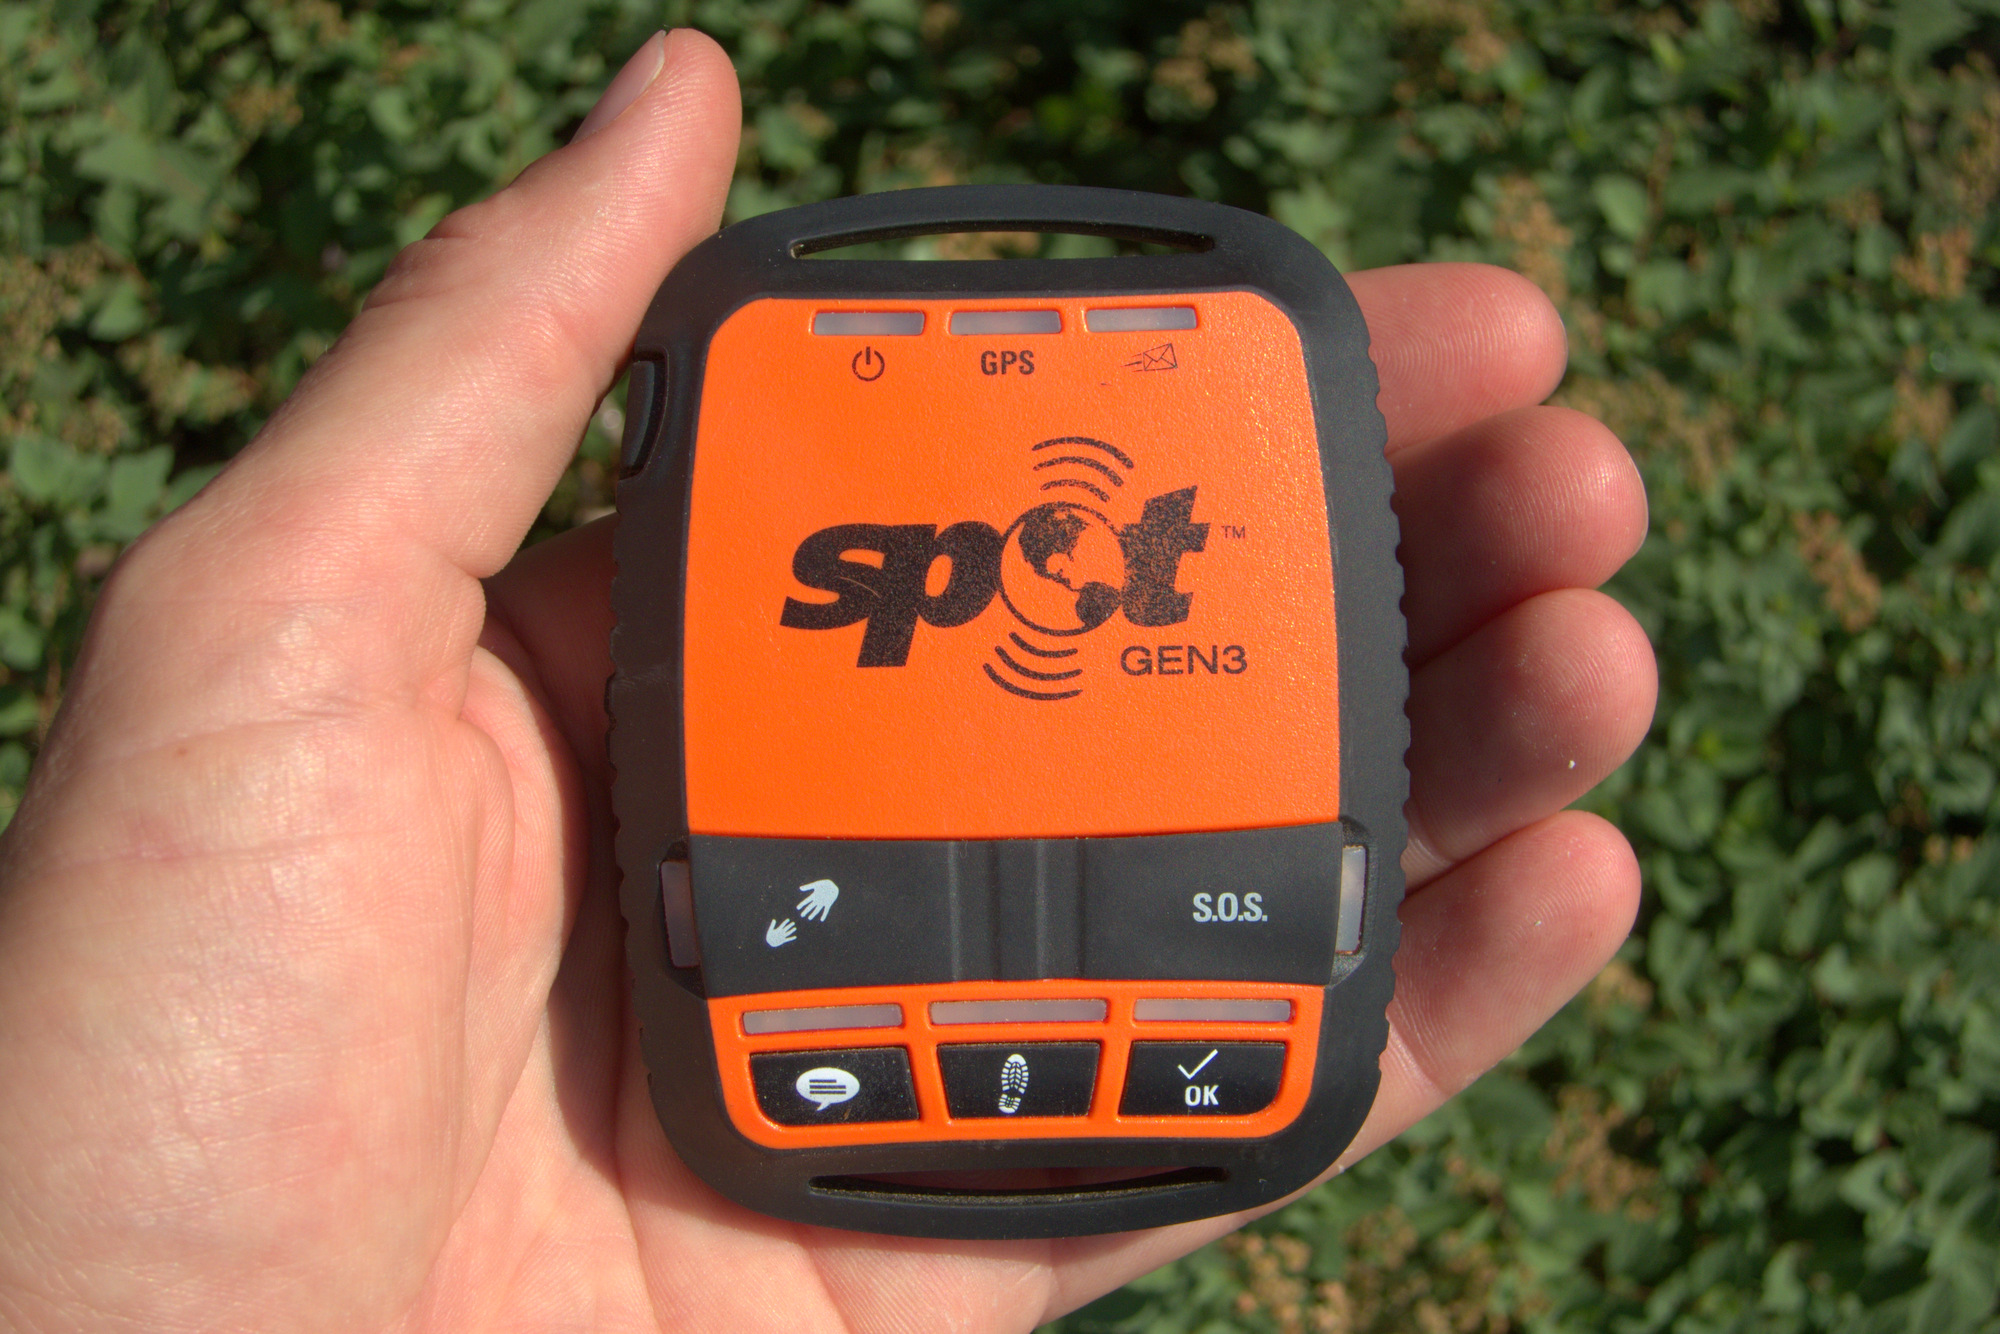 spot-gen3-satellite-gps-tracker-and-global-sos-handheld-device